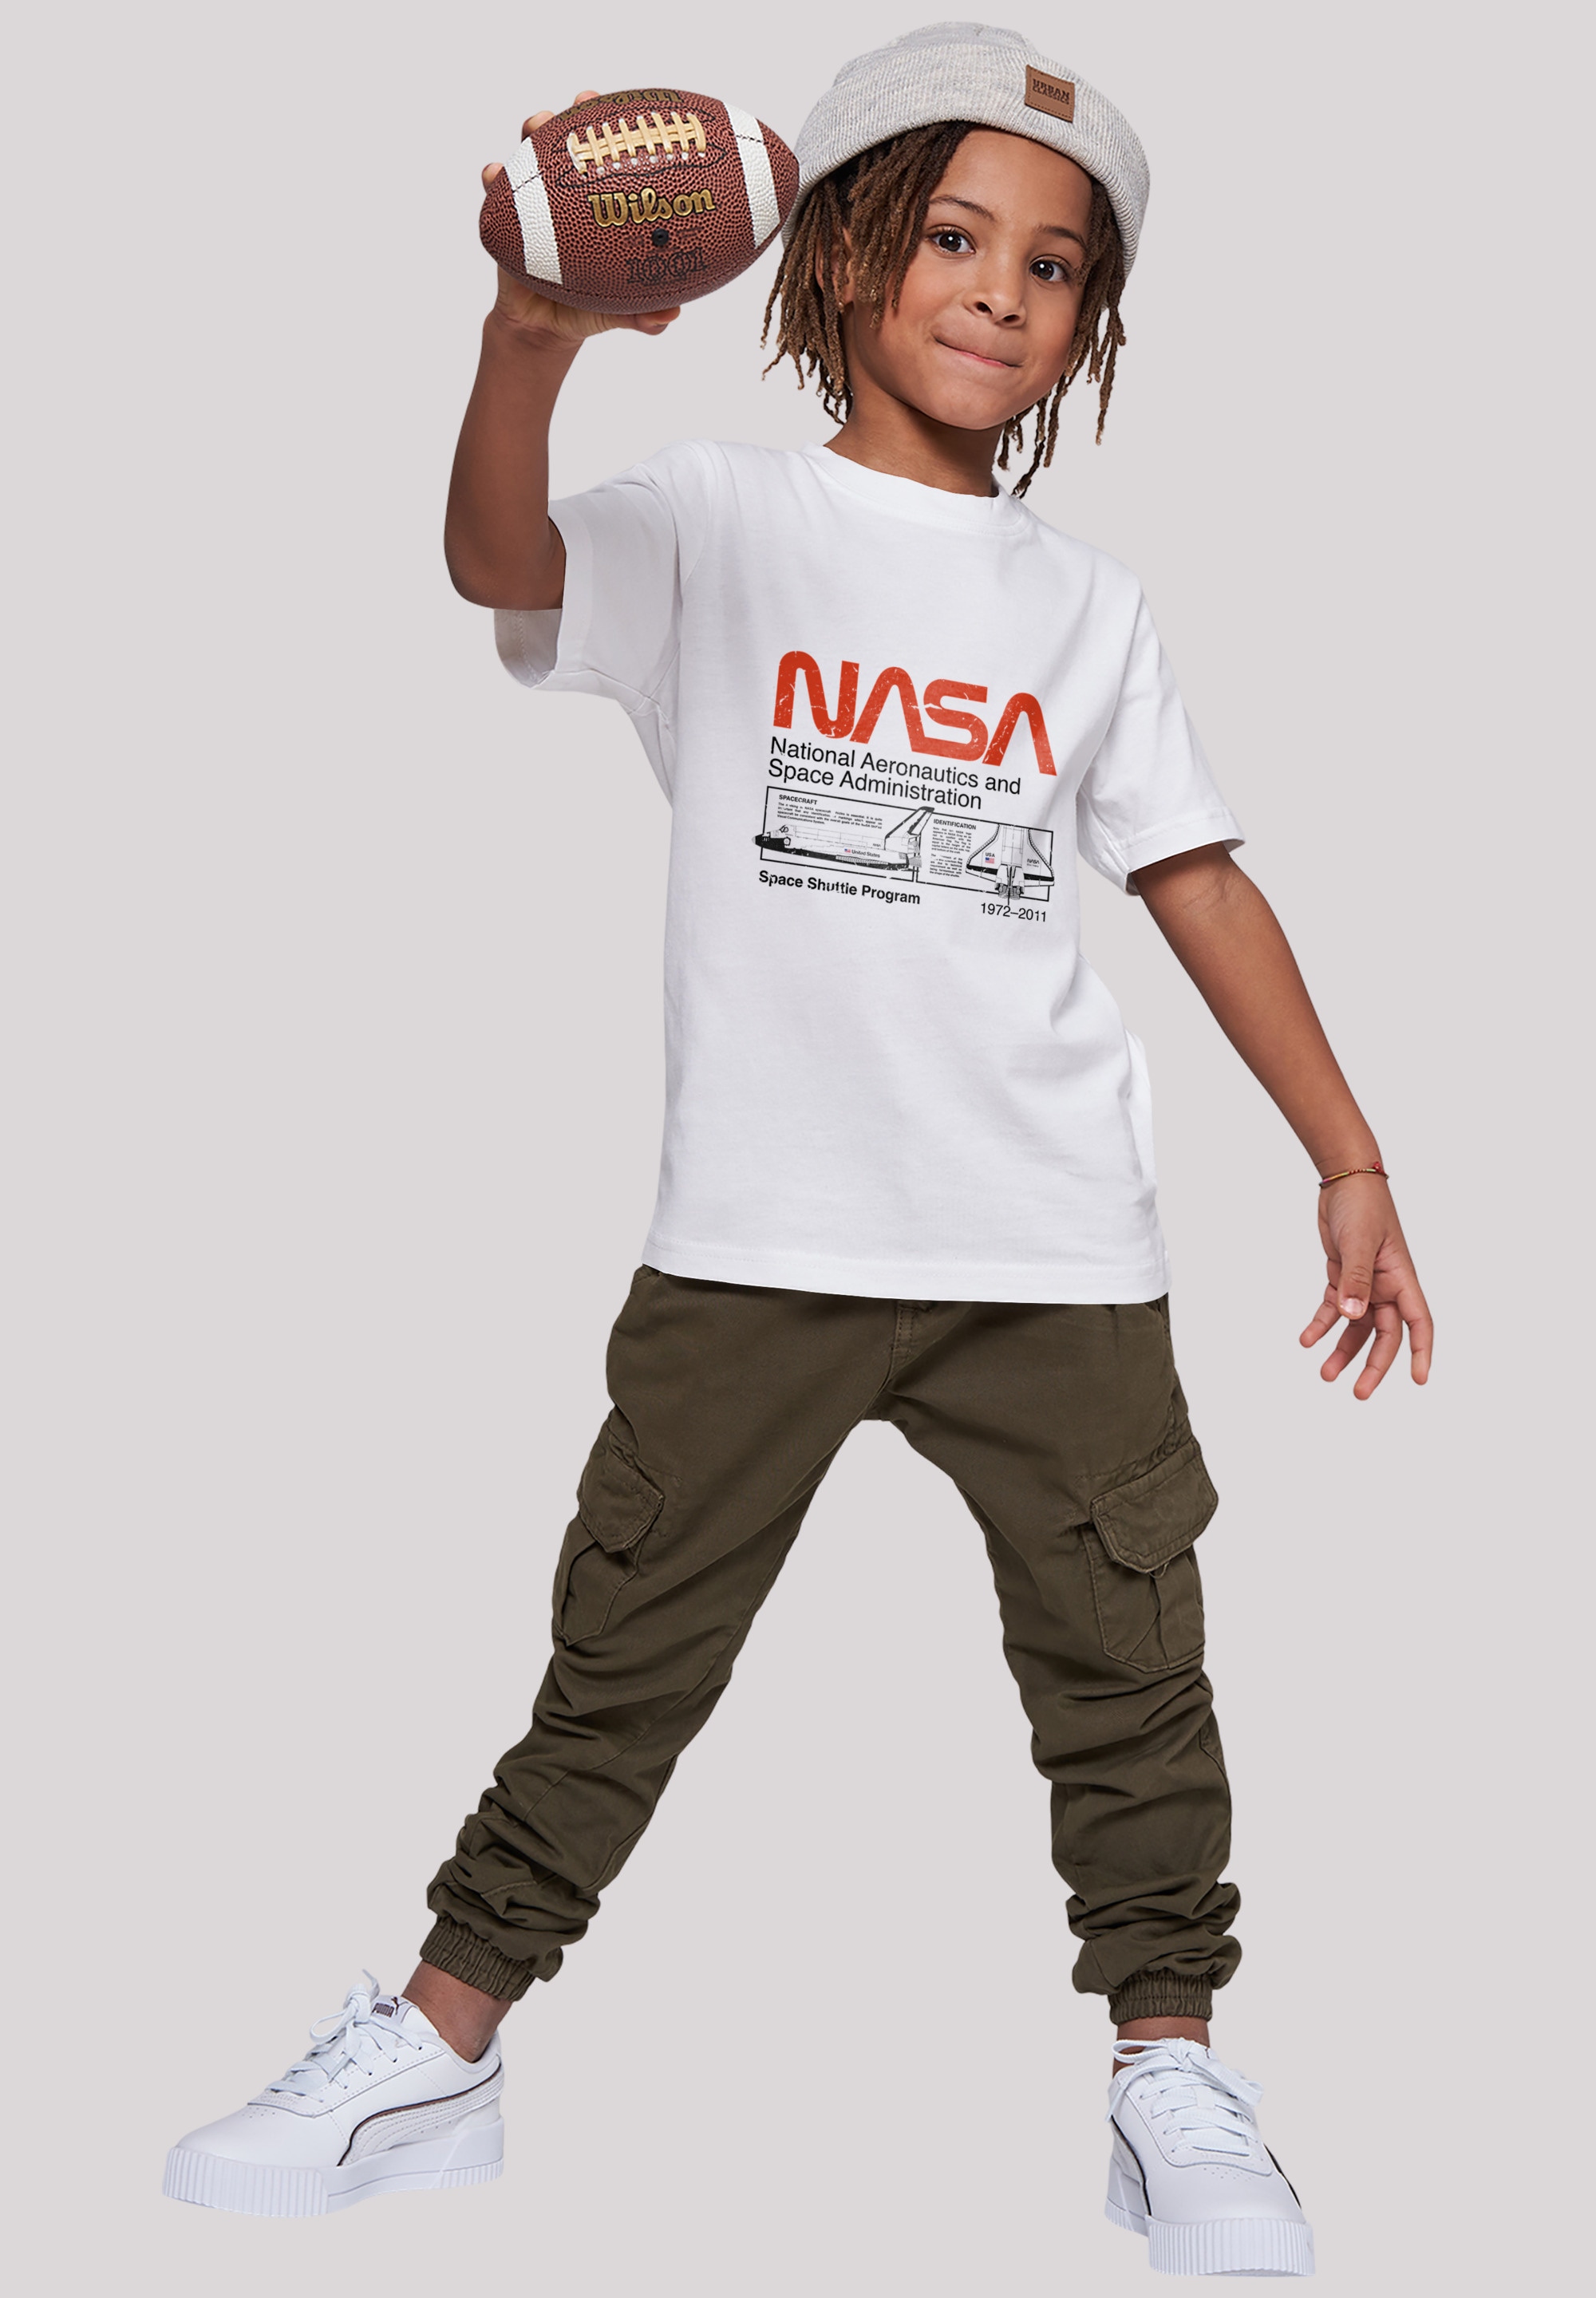 Merch,Jungen,Mädchen,Bedruckt Classic Unisex F4NT4STIC T-Shirt Shuttle White«, »NASA Black Friday BAUR Kinder,Premium Space |